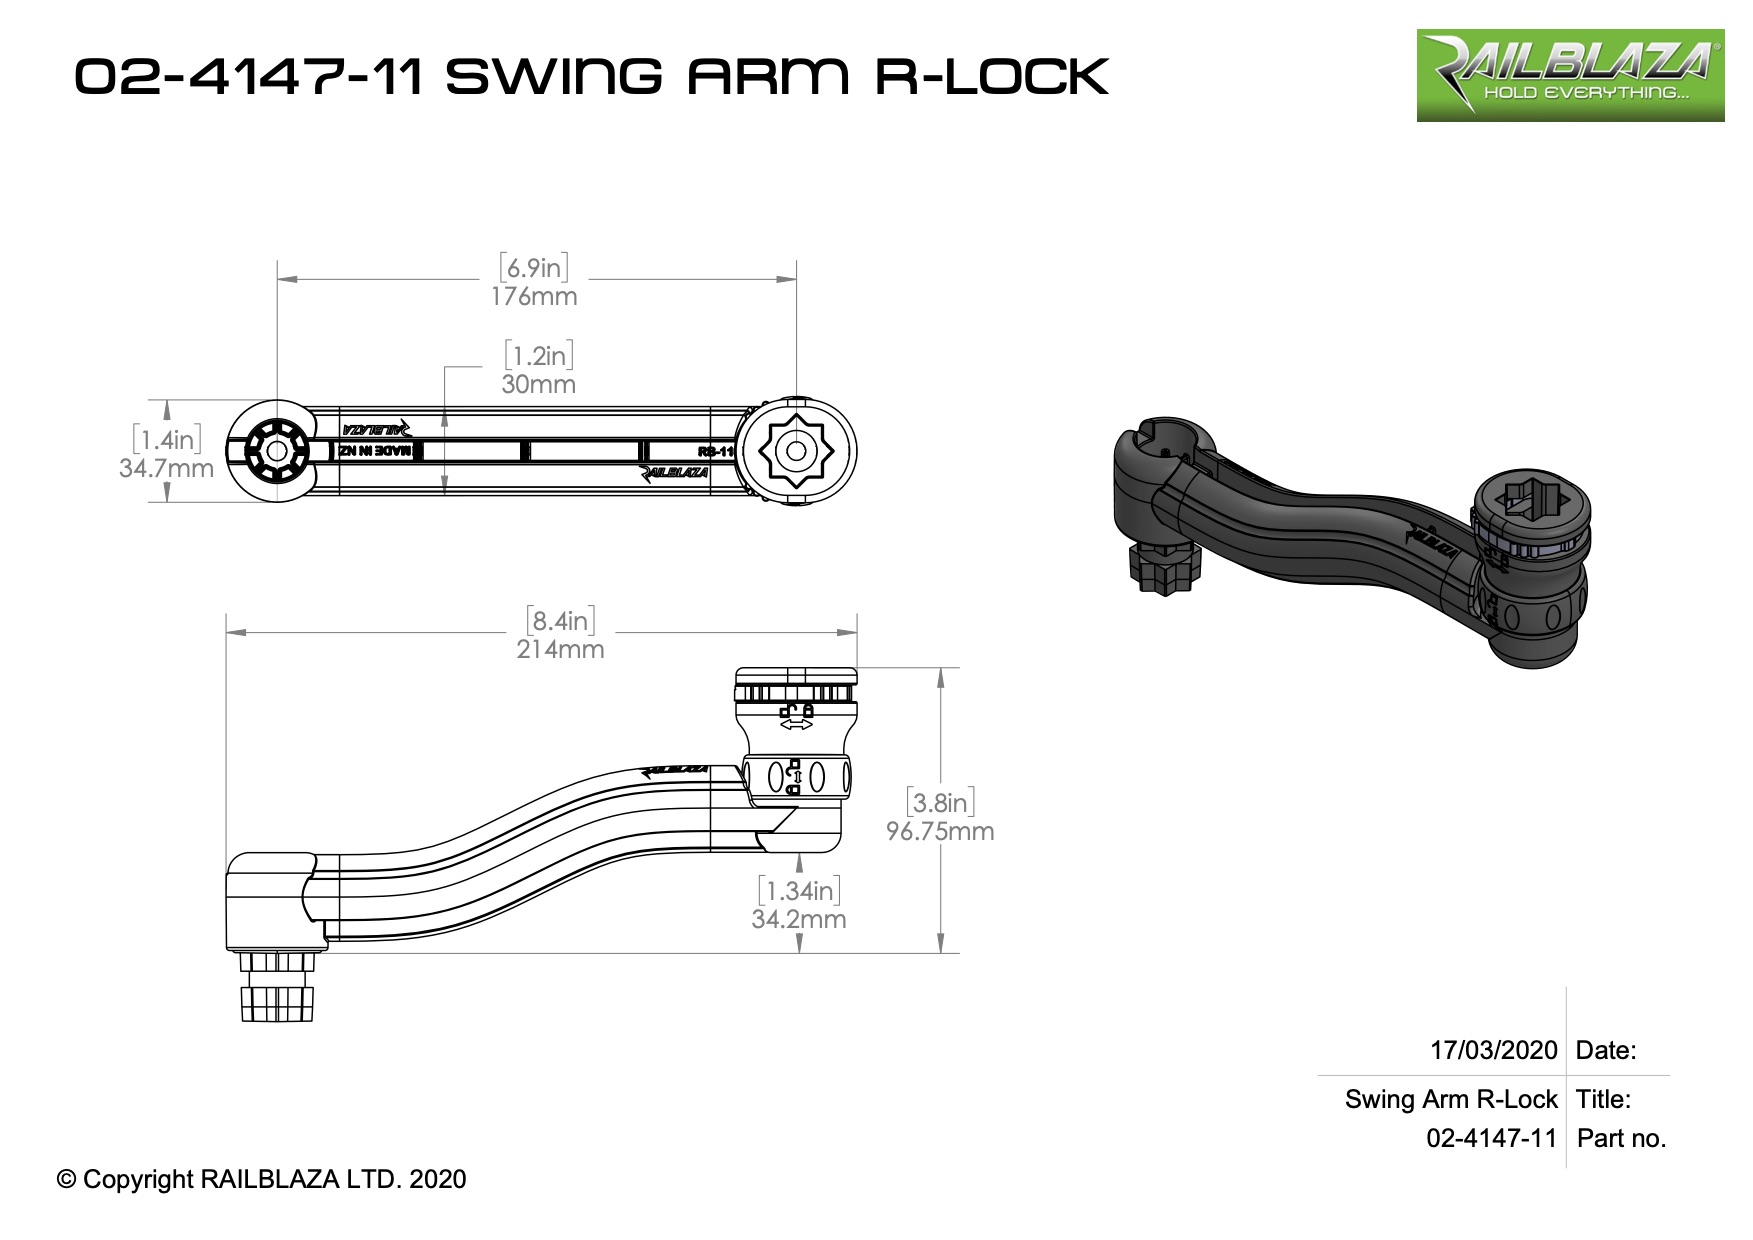 Swing-Arm-R-Lock-RAILBLAZA-Swing-Arm-R-Lock-Dimension-Drawing-2458_205305.jpg